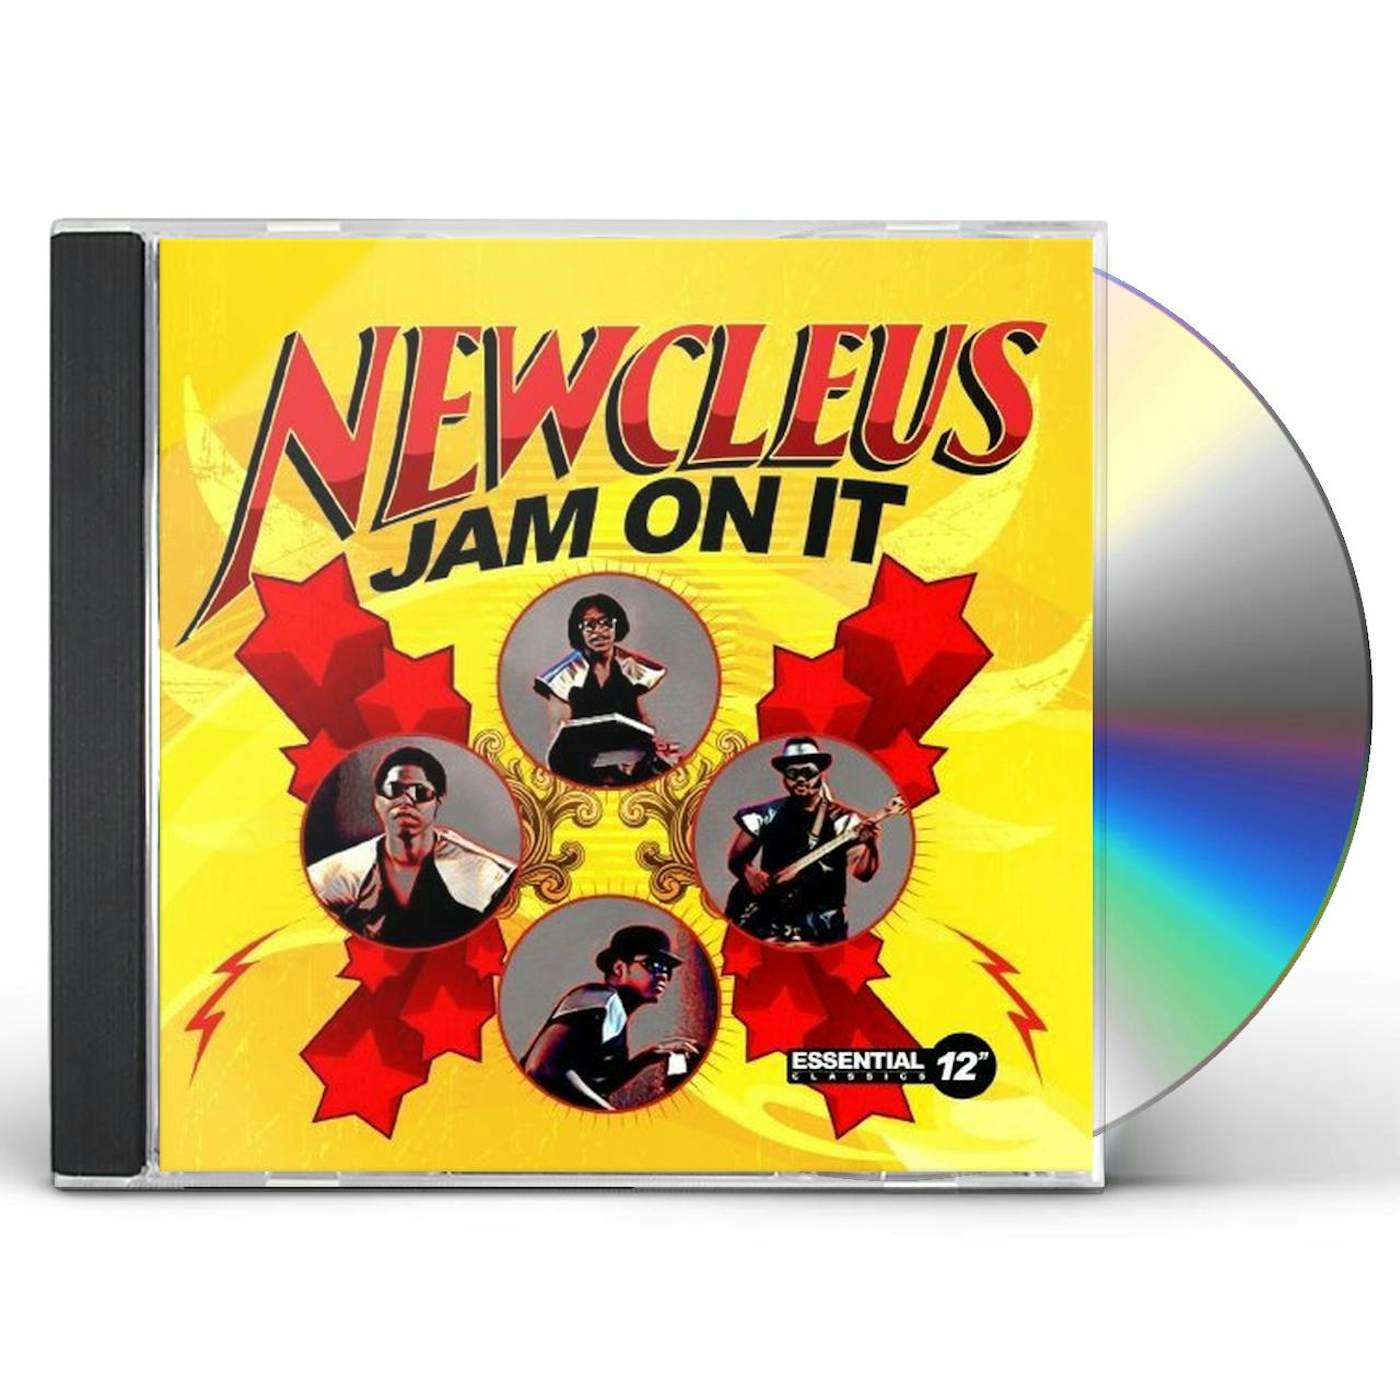 Newcleus JAM ON IT CD